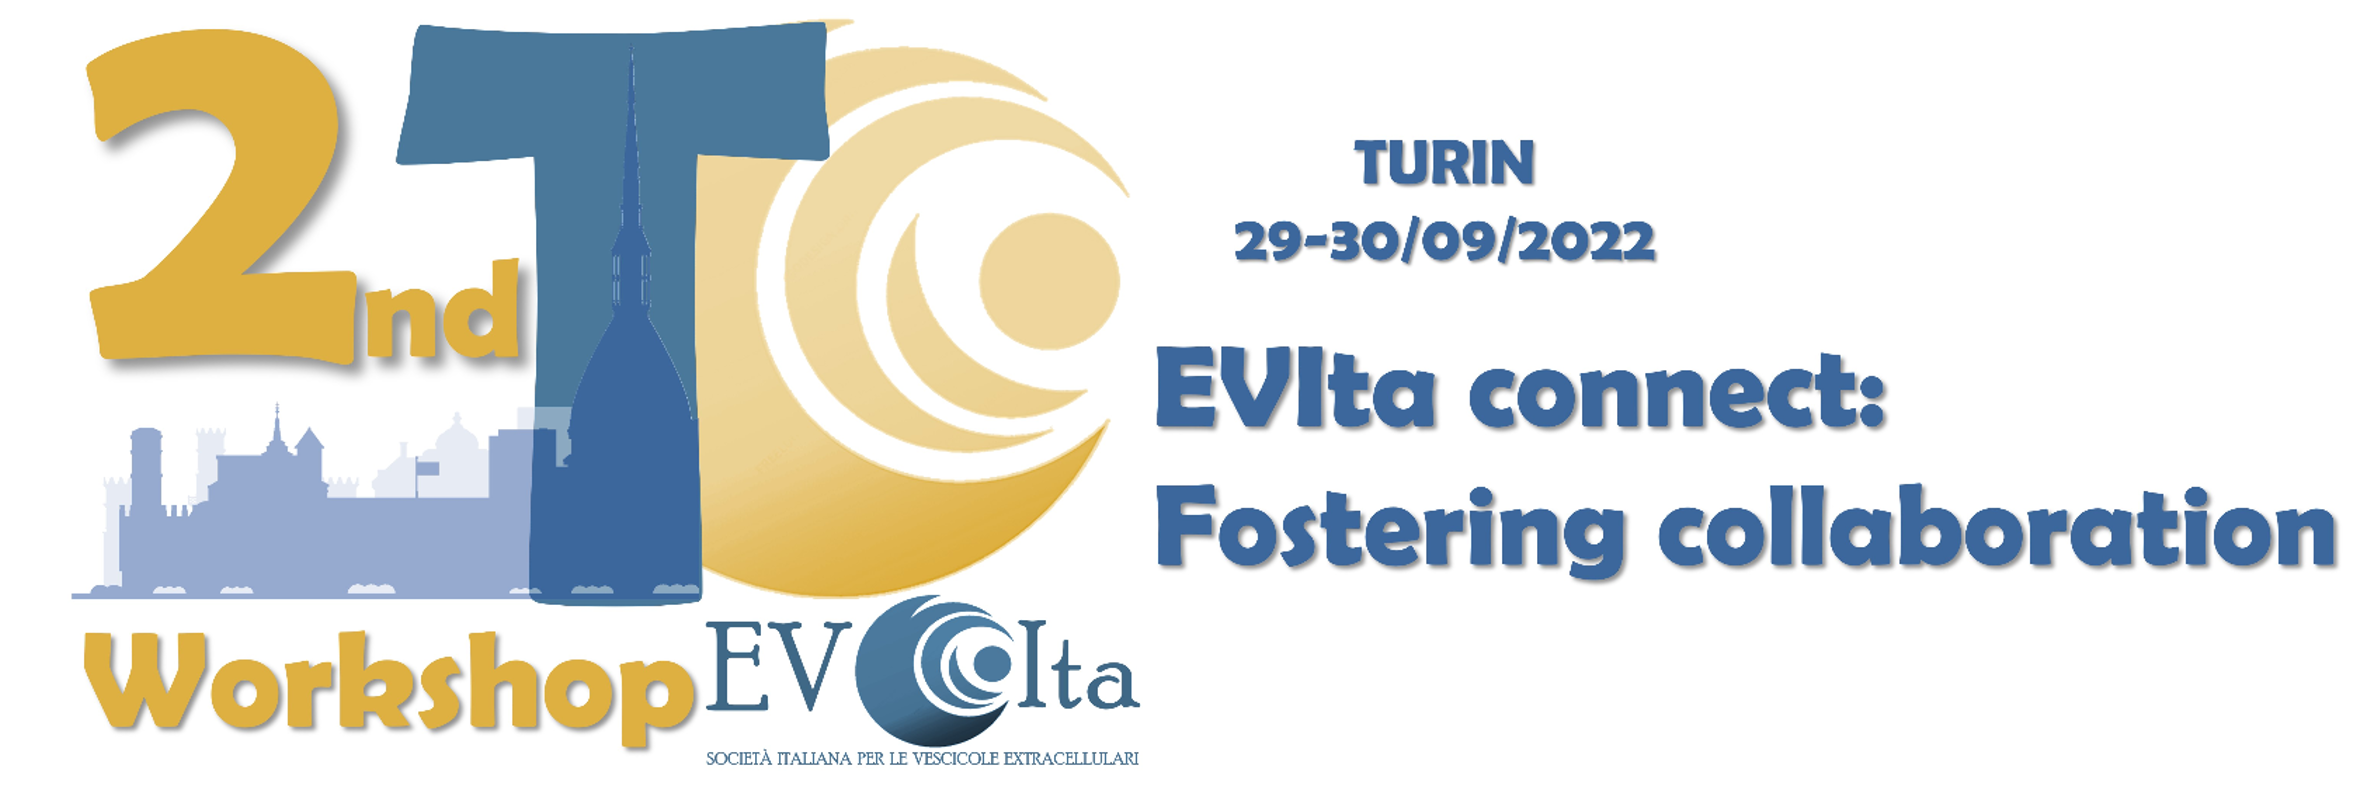 EVITA workshop